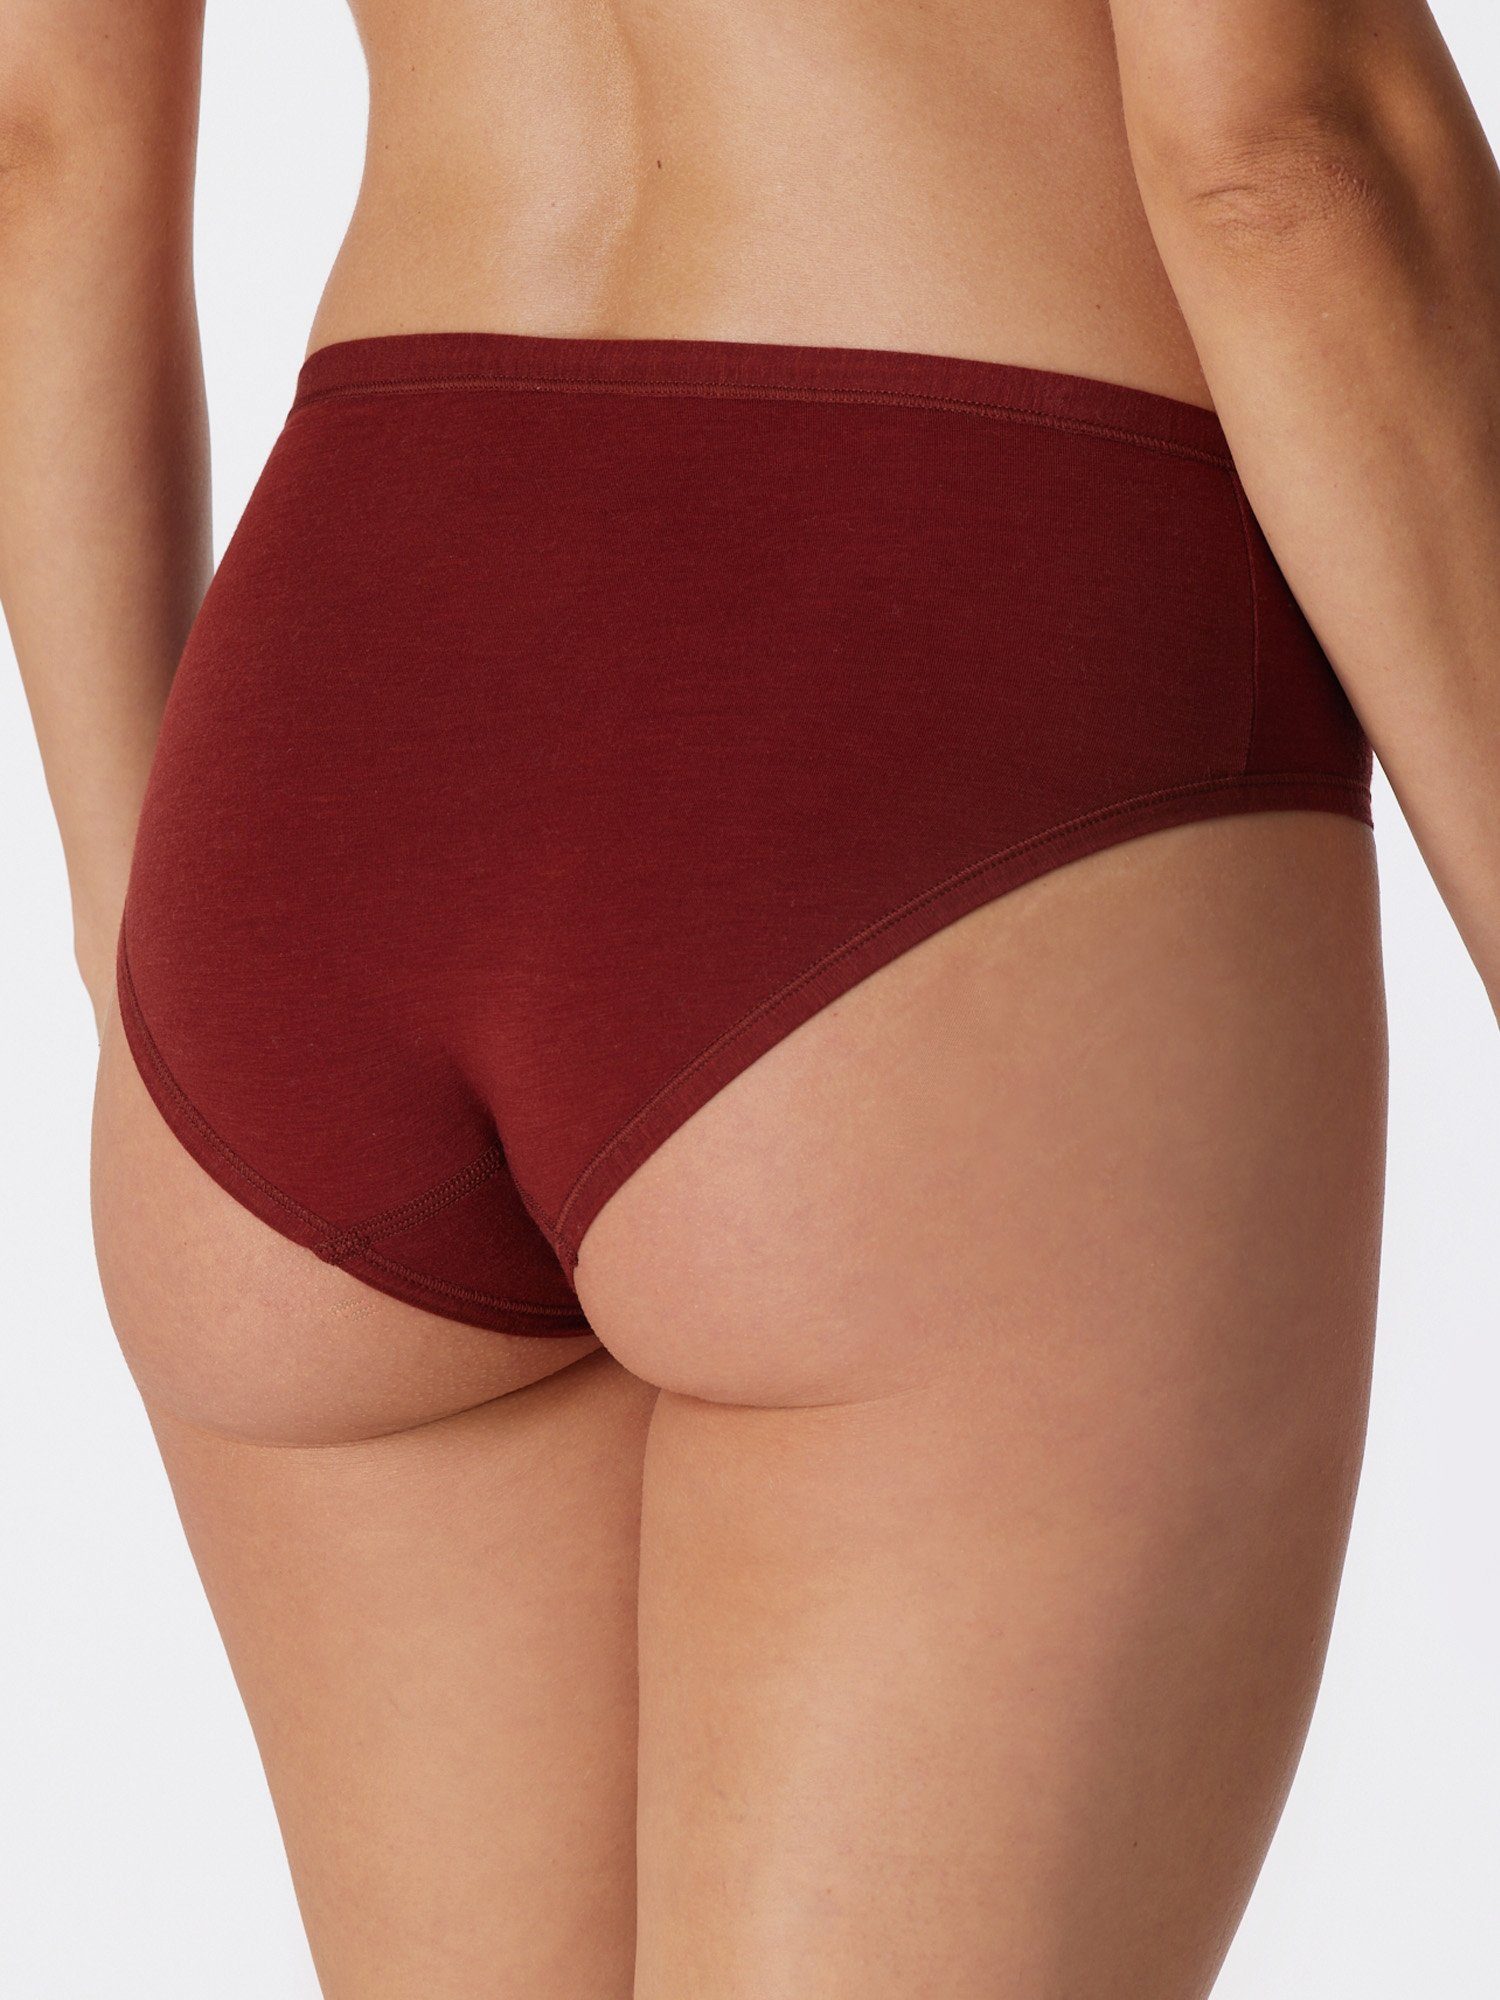 panty-s Personal Schiesser shorts Midi-slip terracotta Fit Midislip